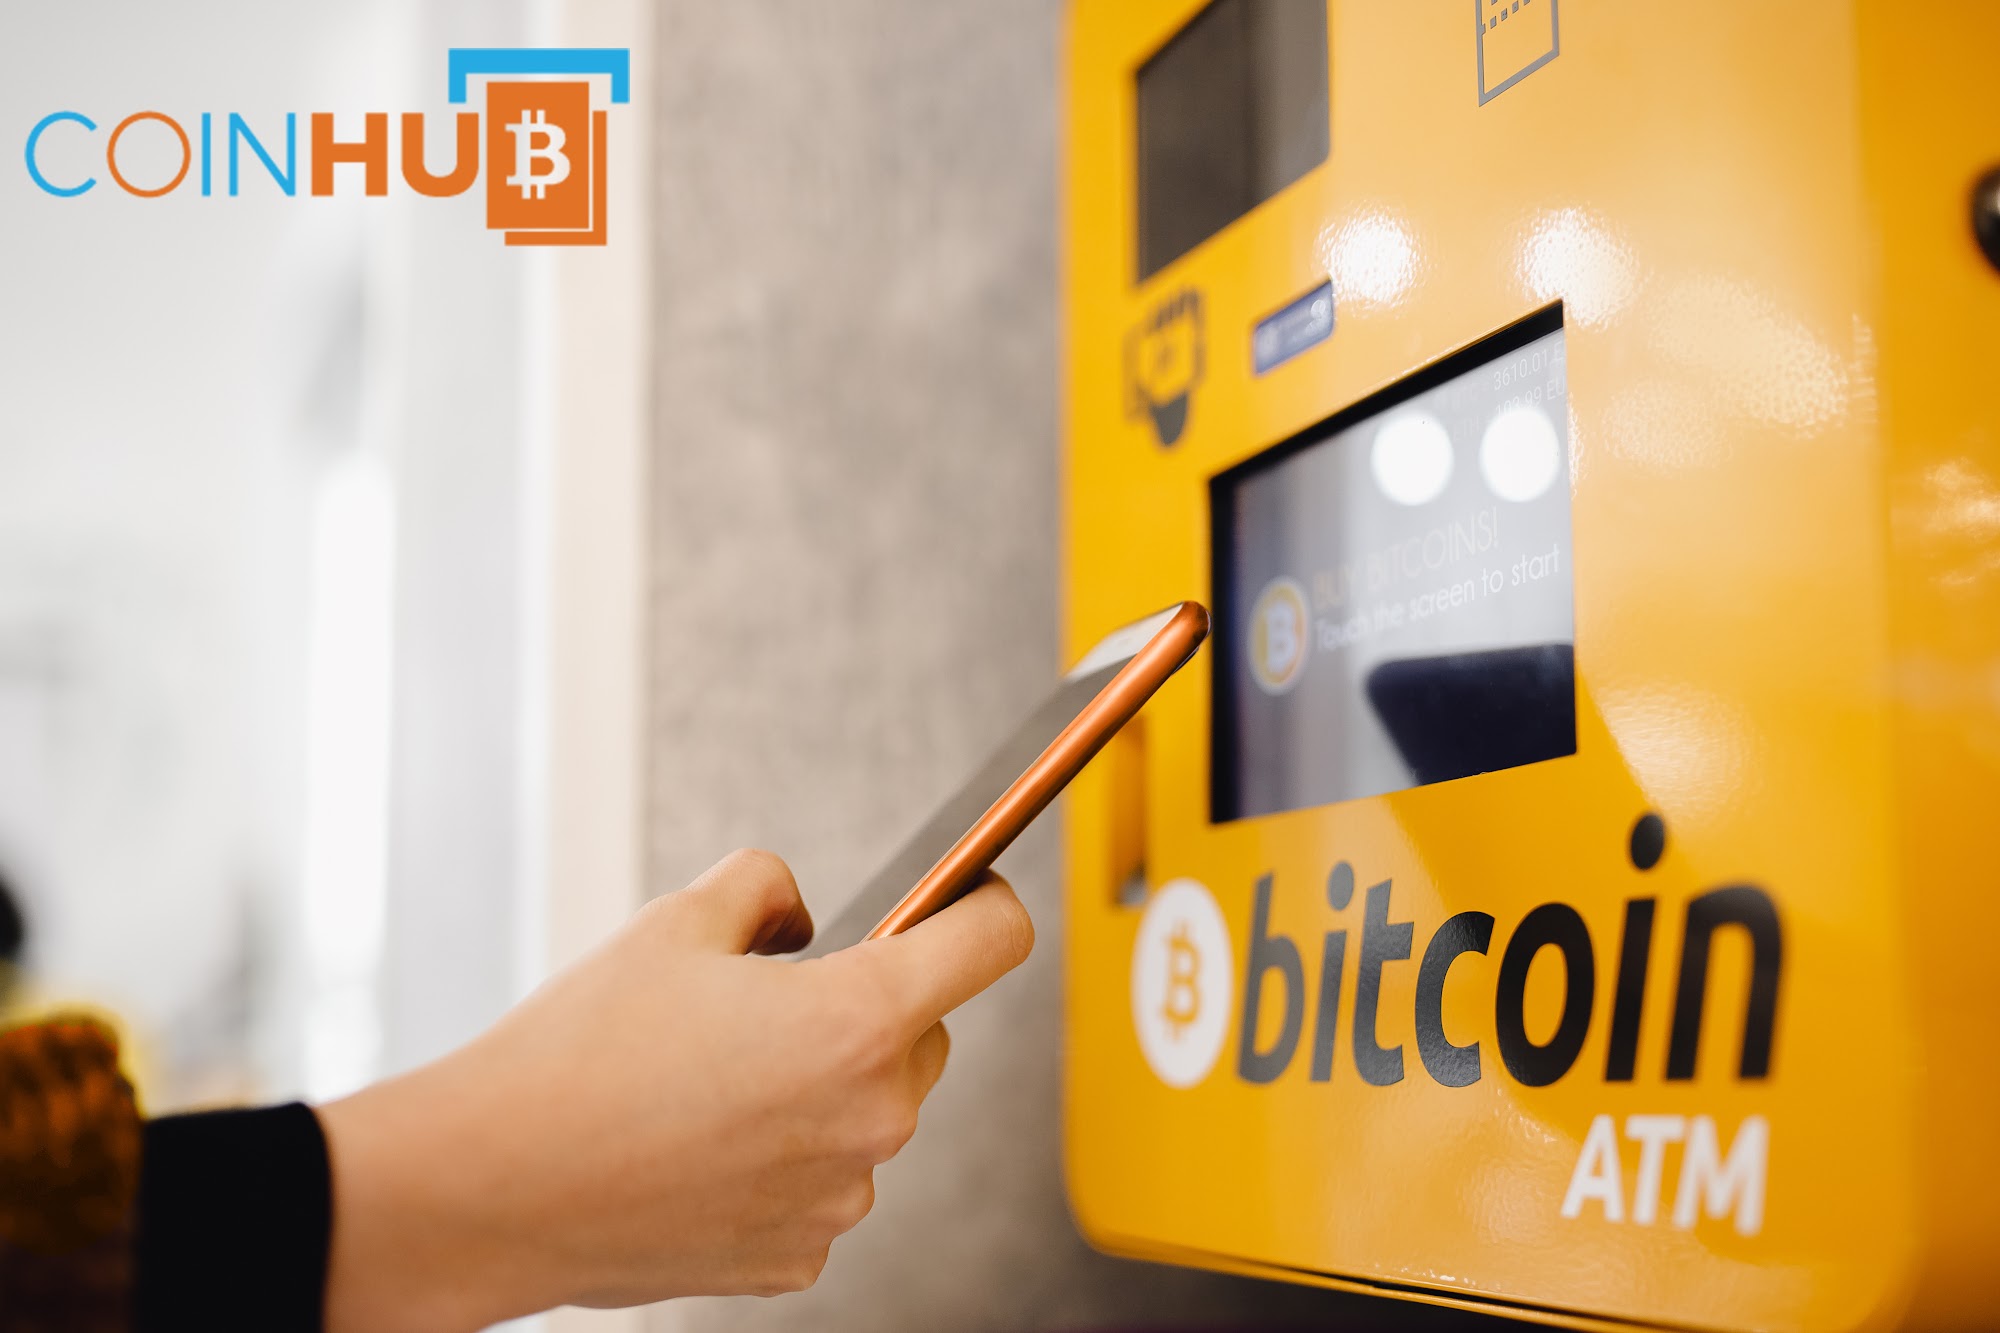 Bitcoin ATM Morristown - Coinhub